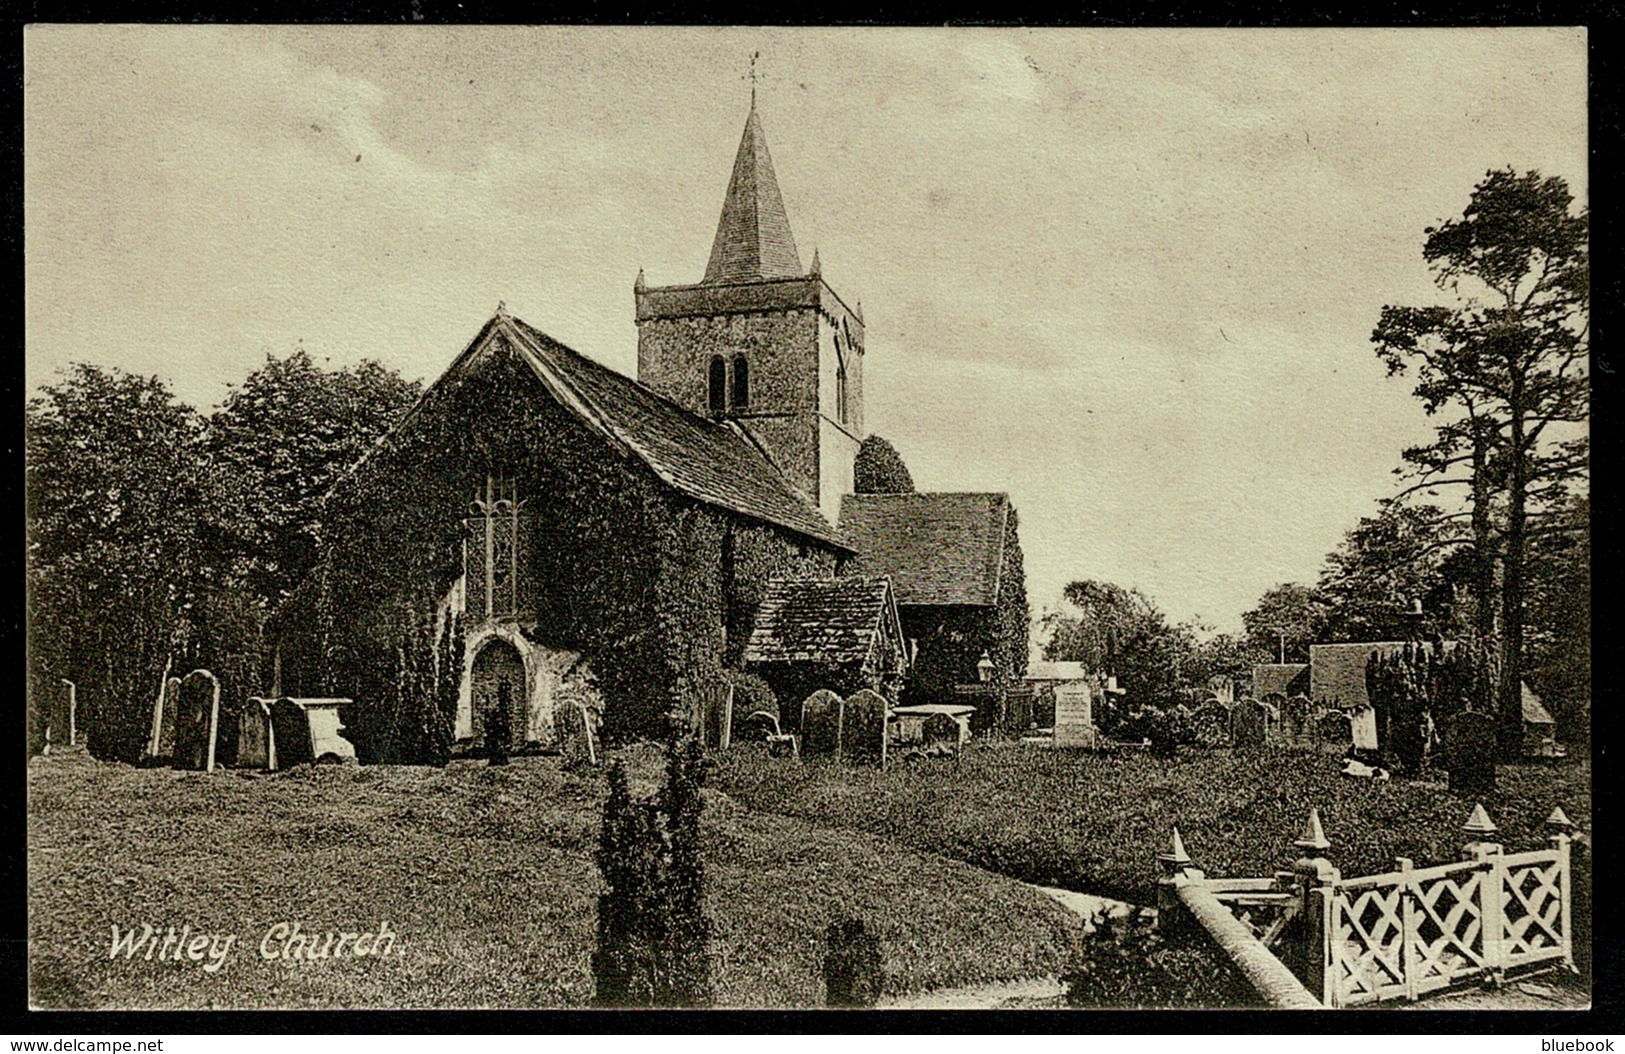 Ref 1275 - Early Postcard - Witley All Saints Church & Graveyard - Surrey - Surrey